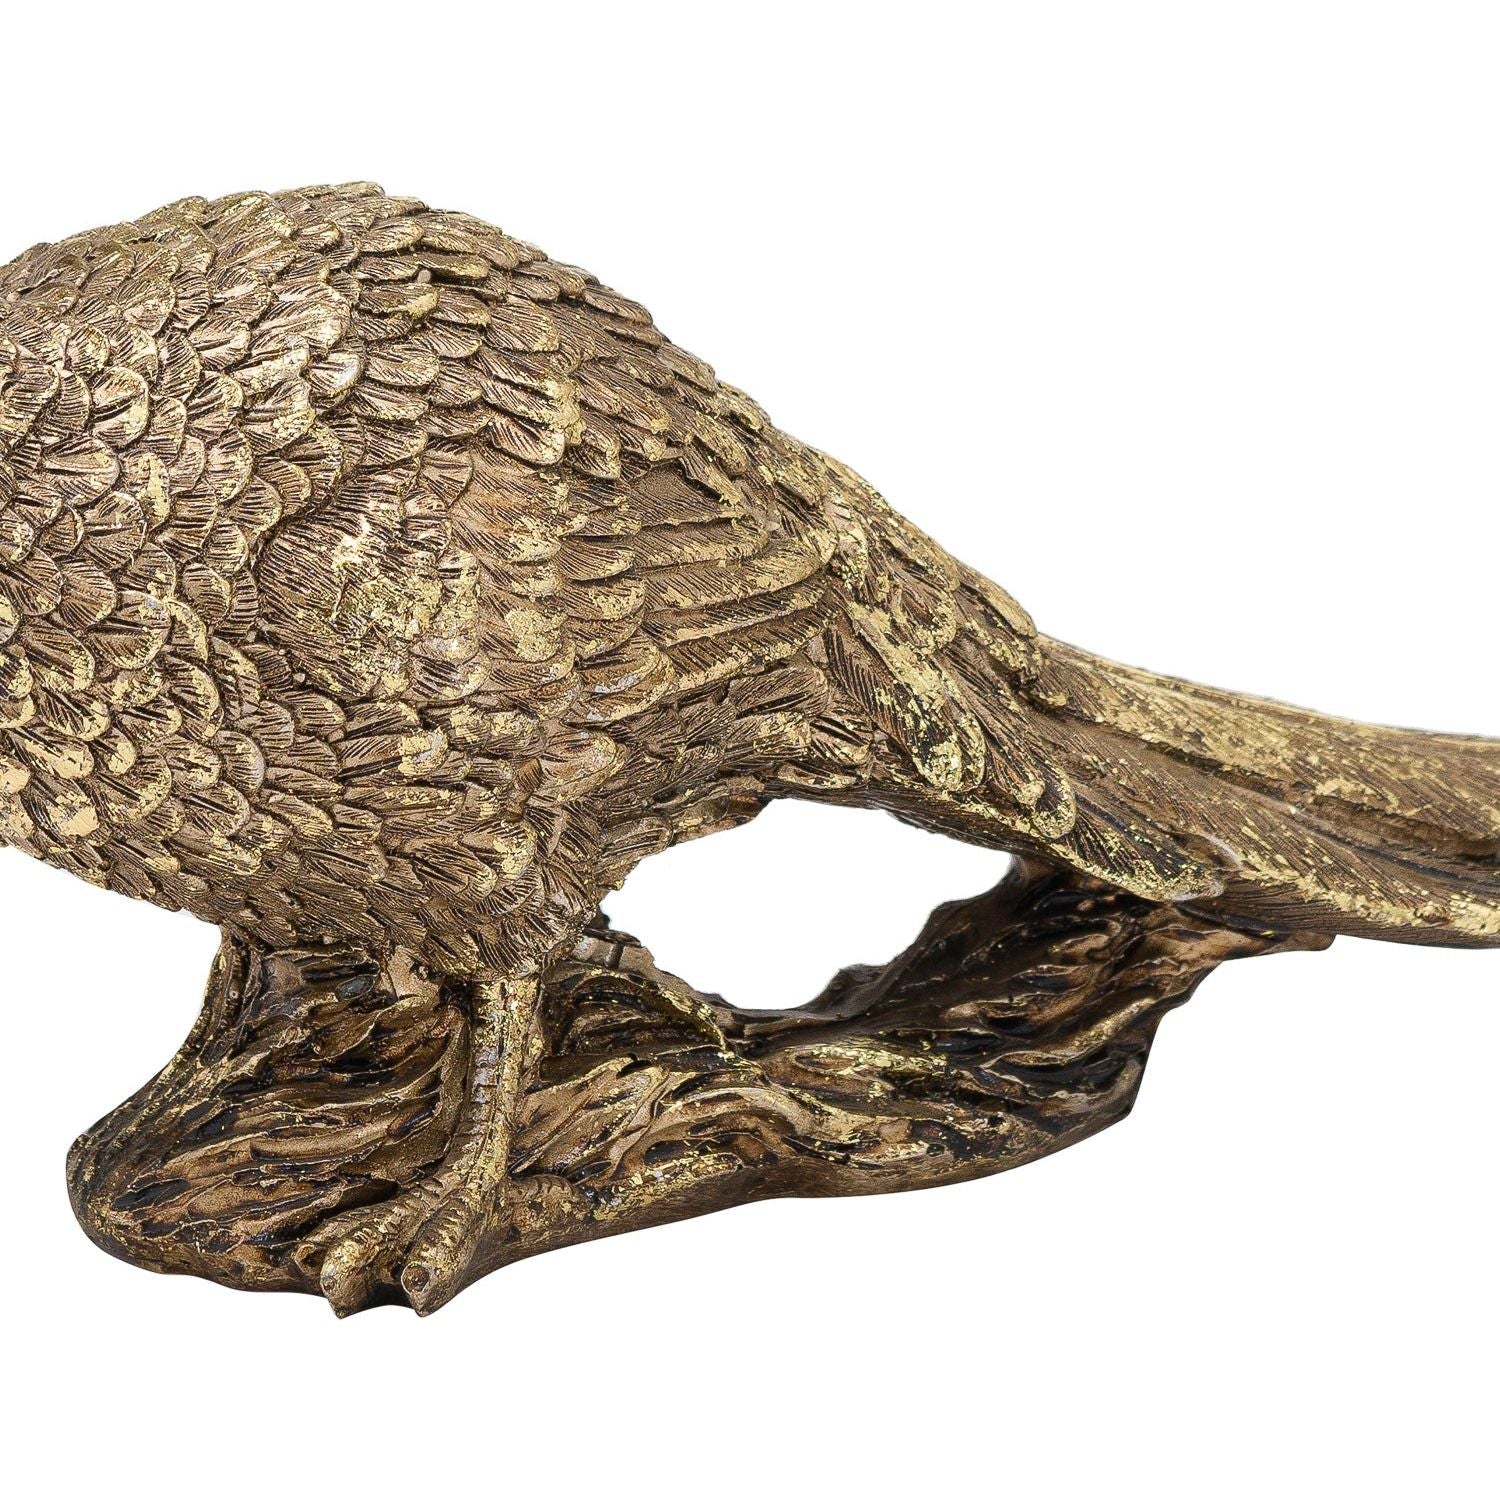 Antique Gold Pheasant Ornament - Ashton and Finch